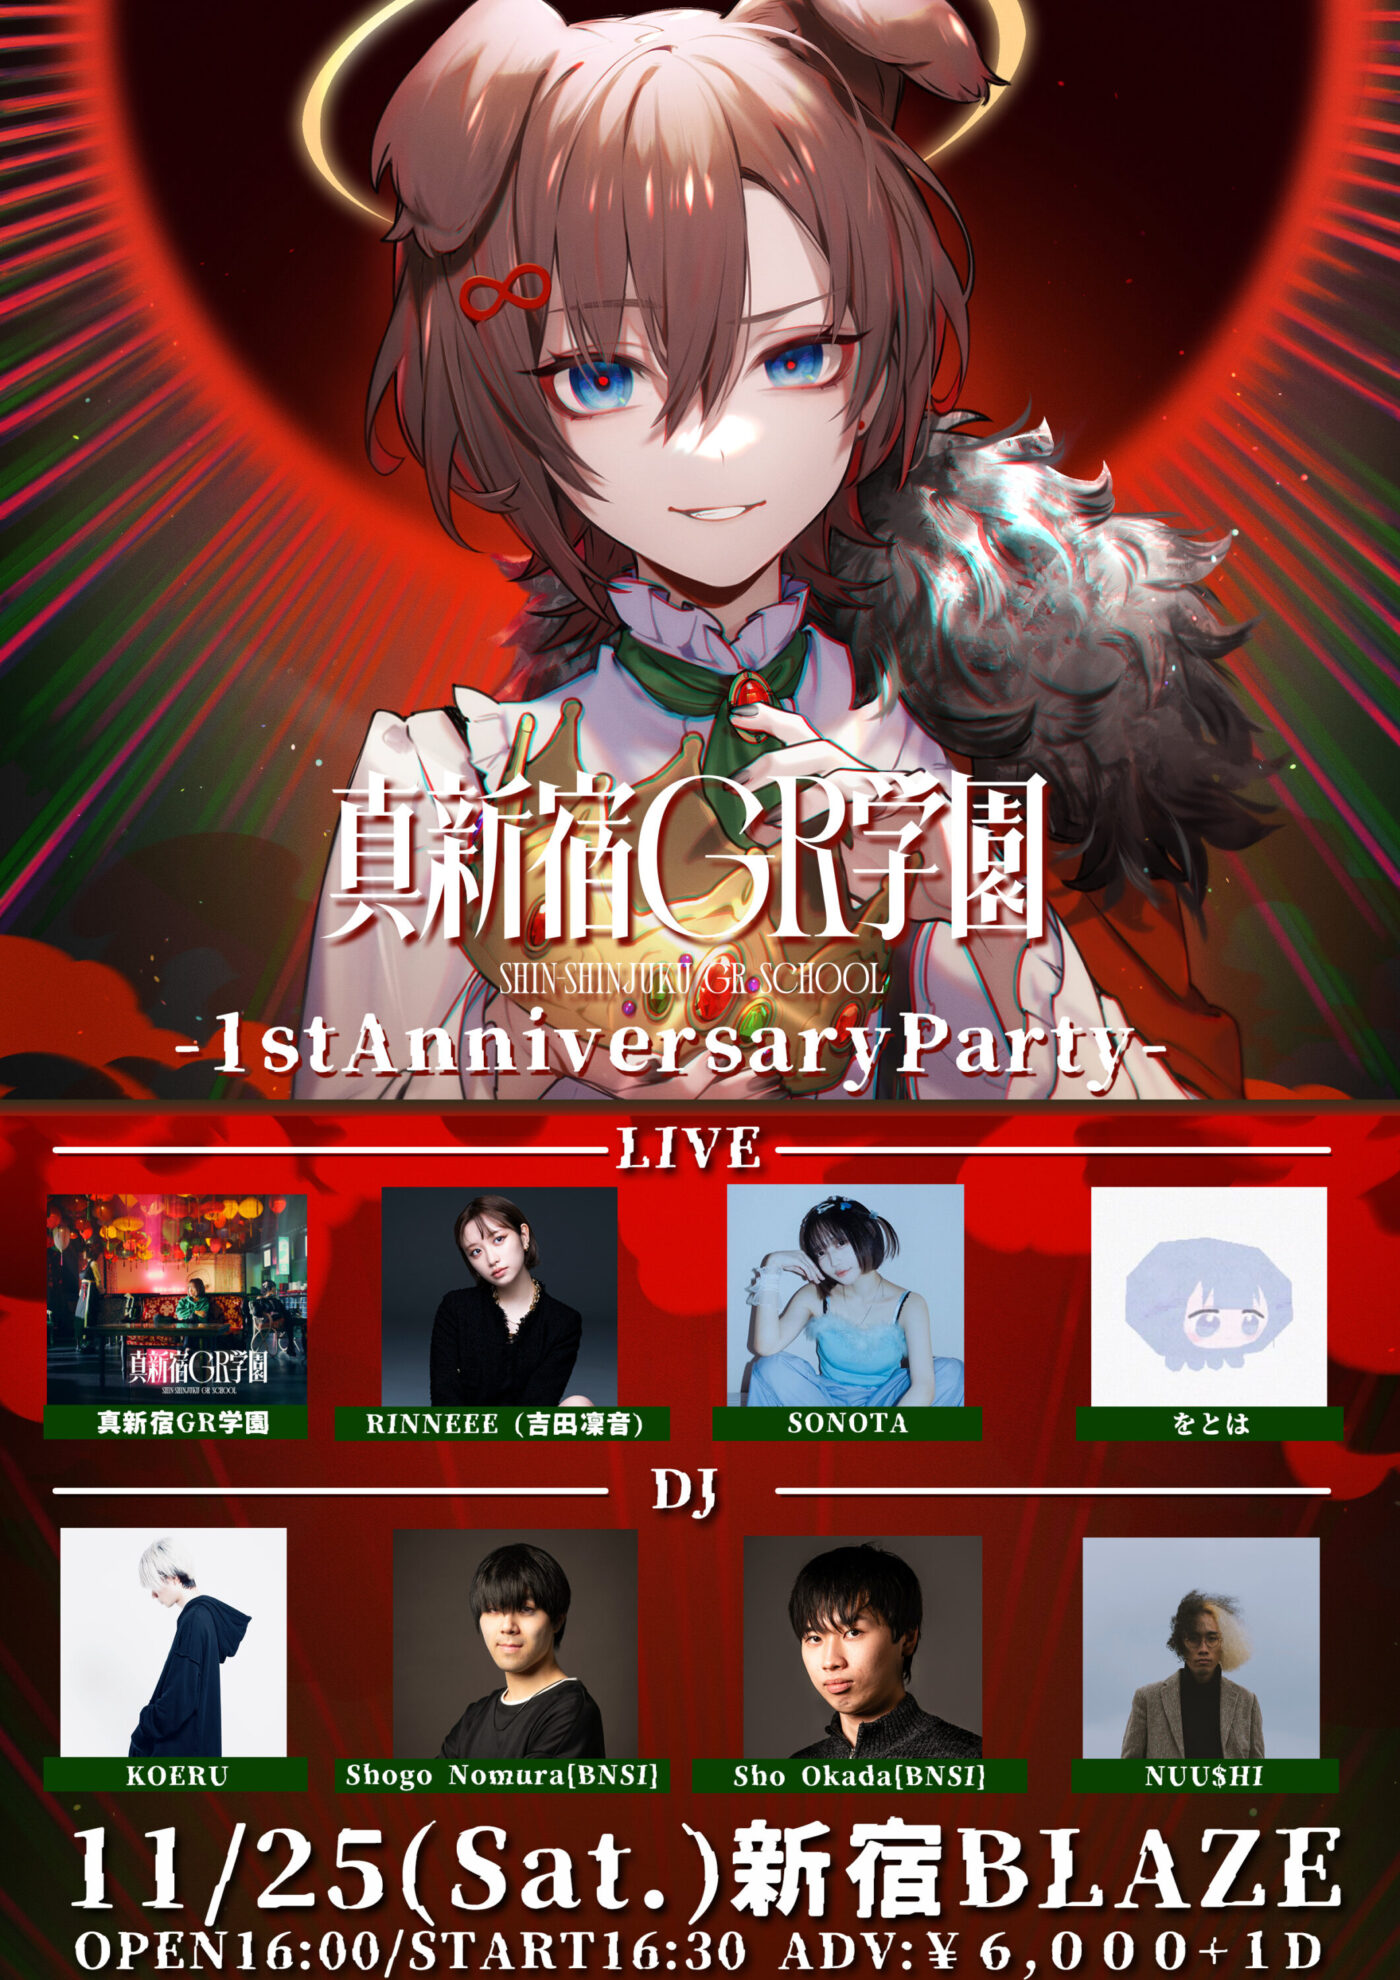 Shin-Shinjuku GR Academy -1st Anniversary Party – Anime Maps